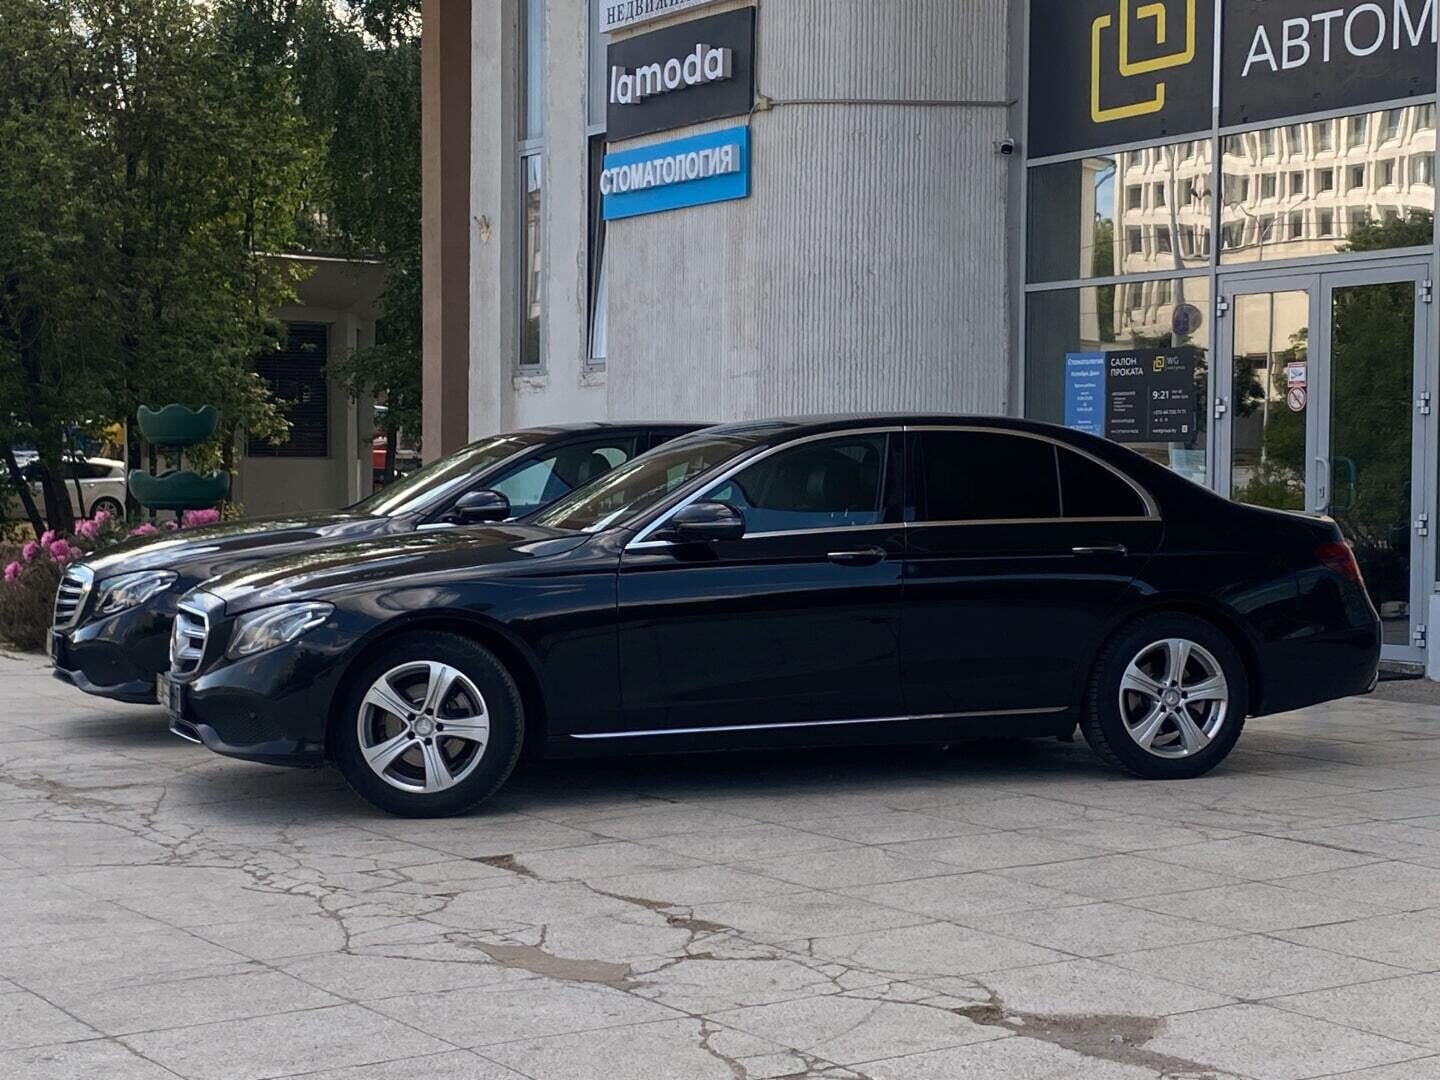 Специальное предложение на ареду Mercedes Benz E-class